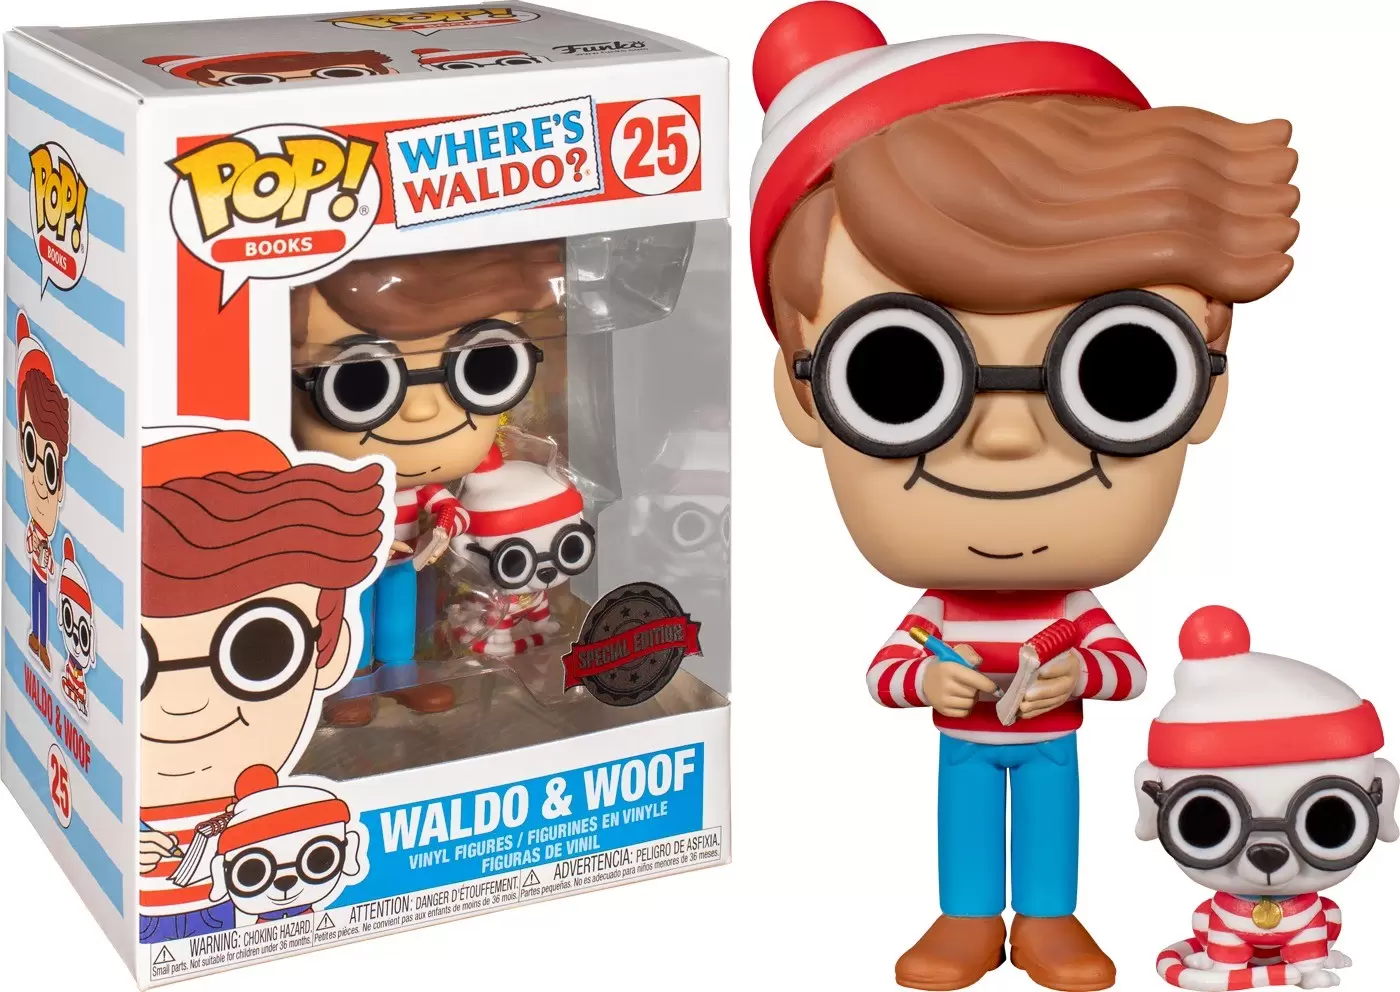 Where's Waldo - Waldo & Woof - POP! Books action figure 25